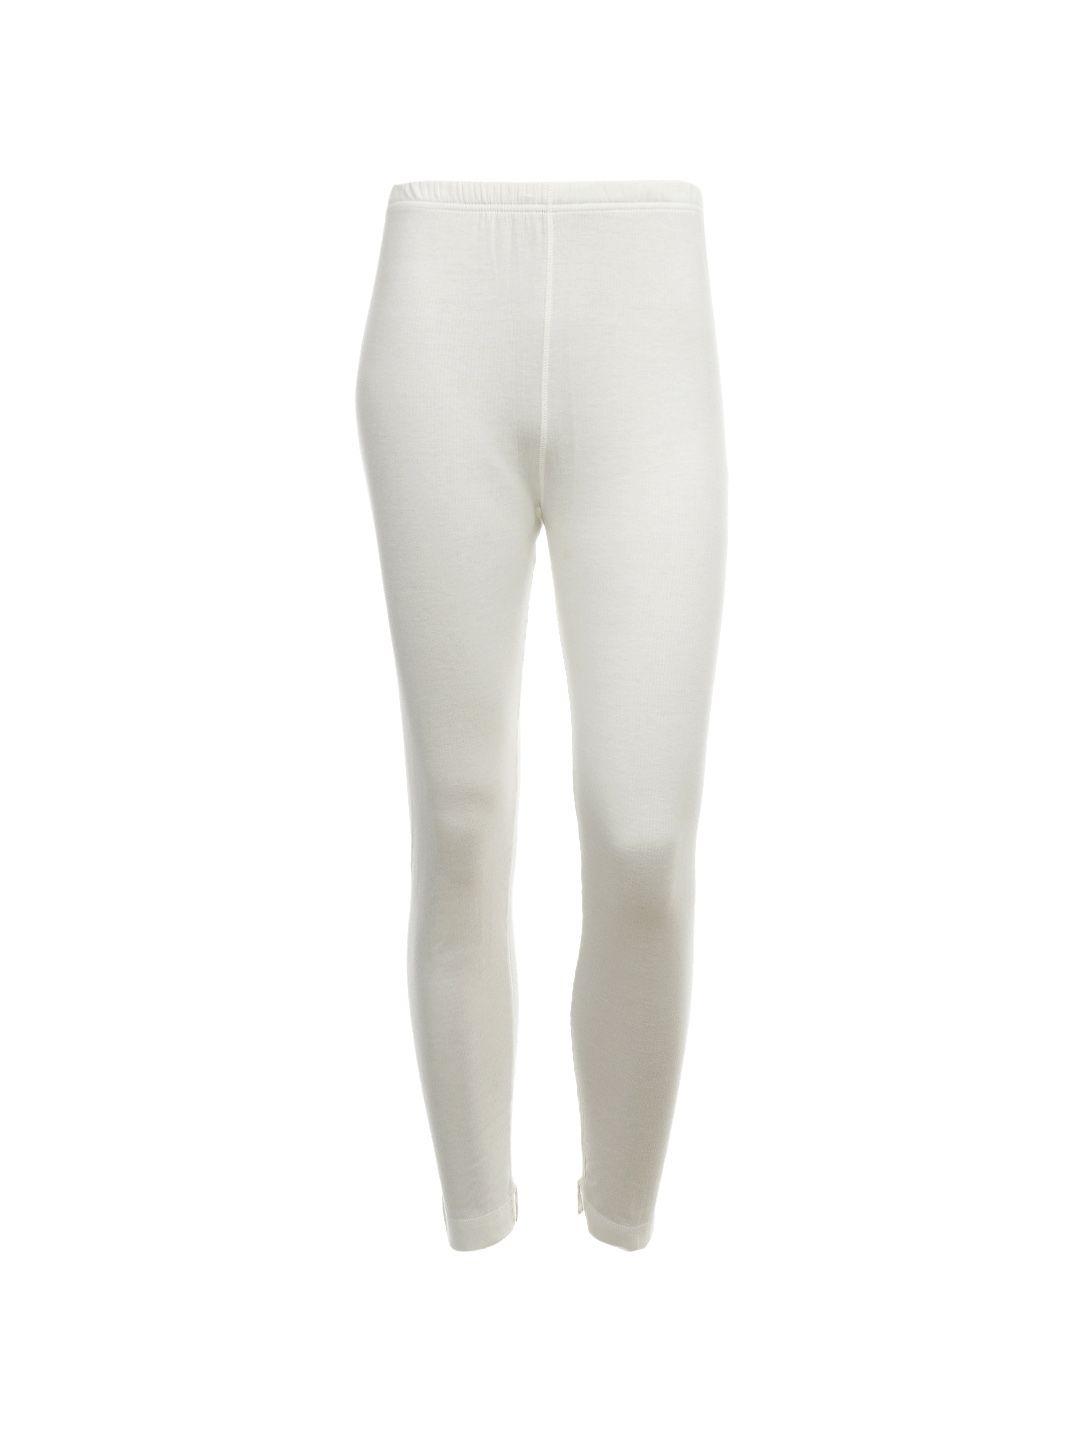 jockey-women-off-white-thermal-leggings